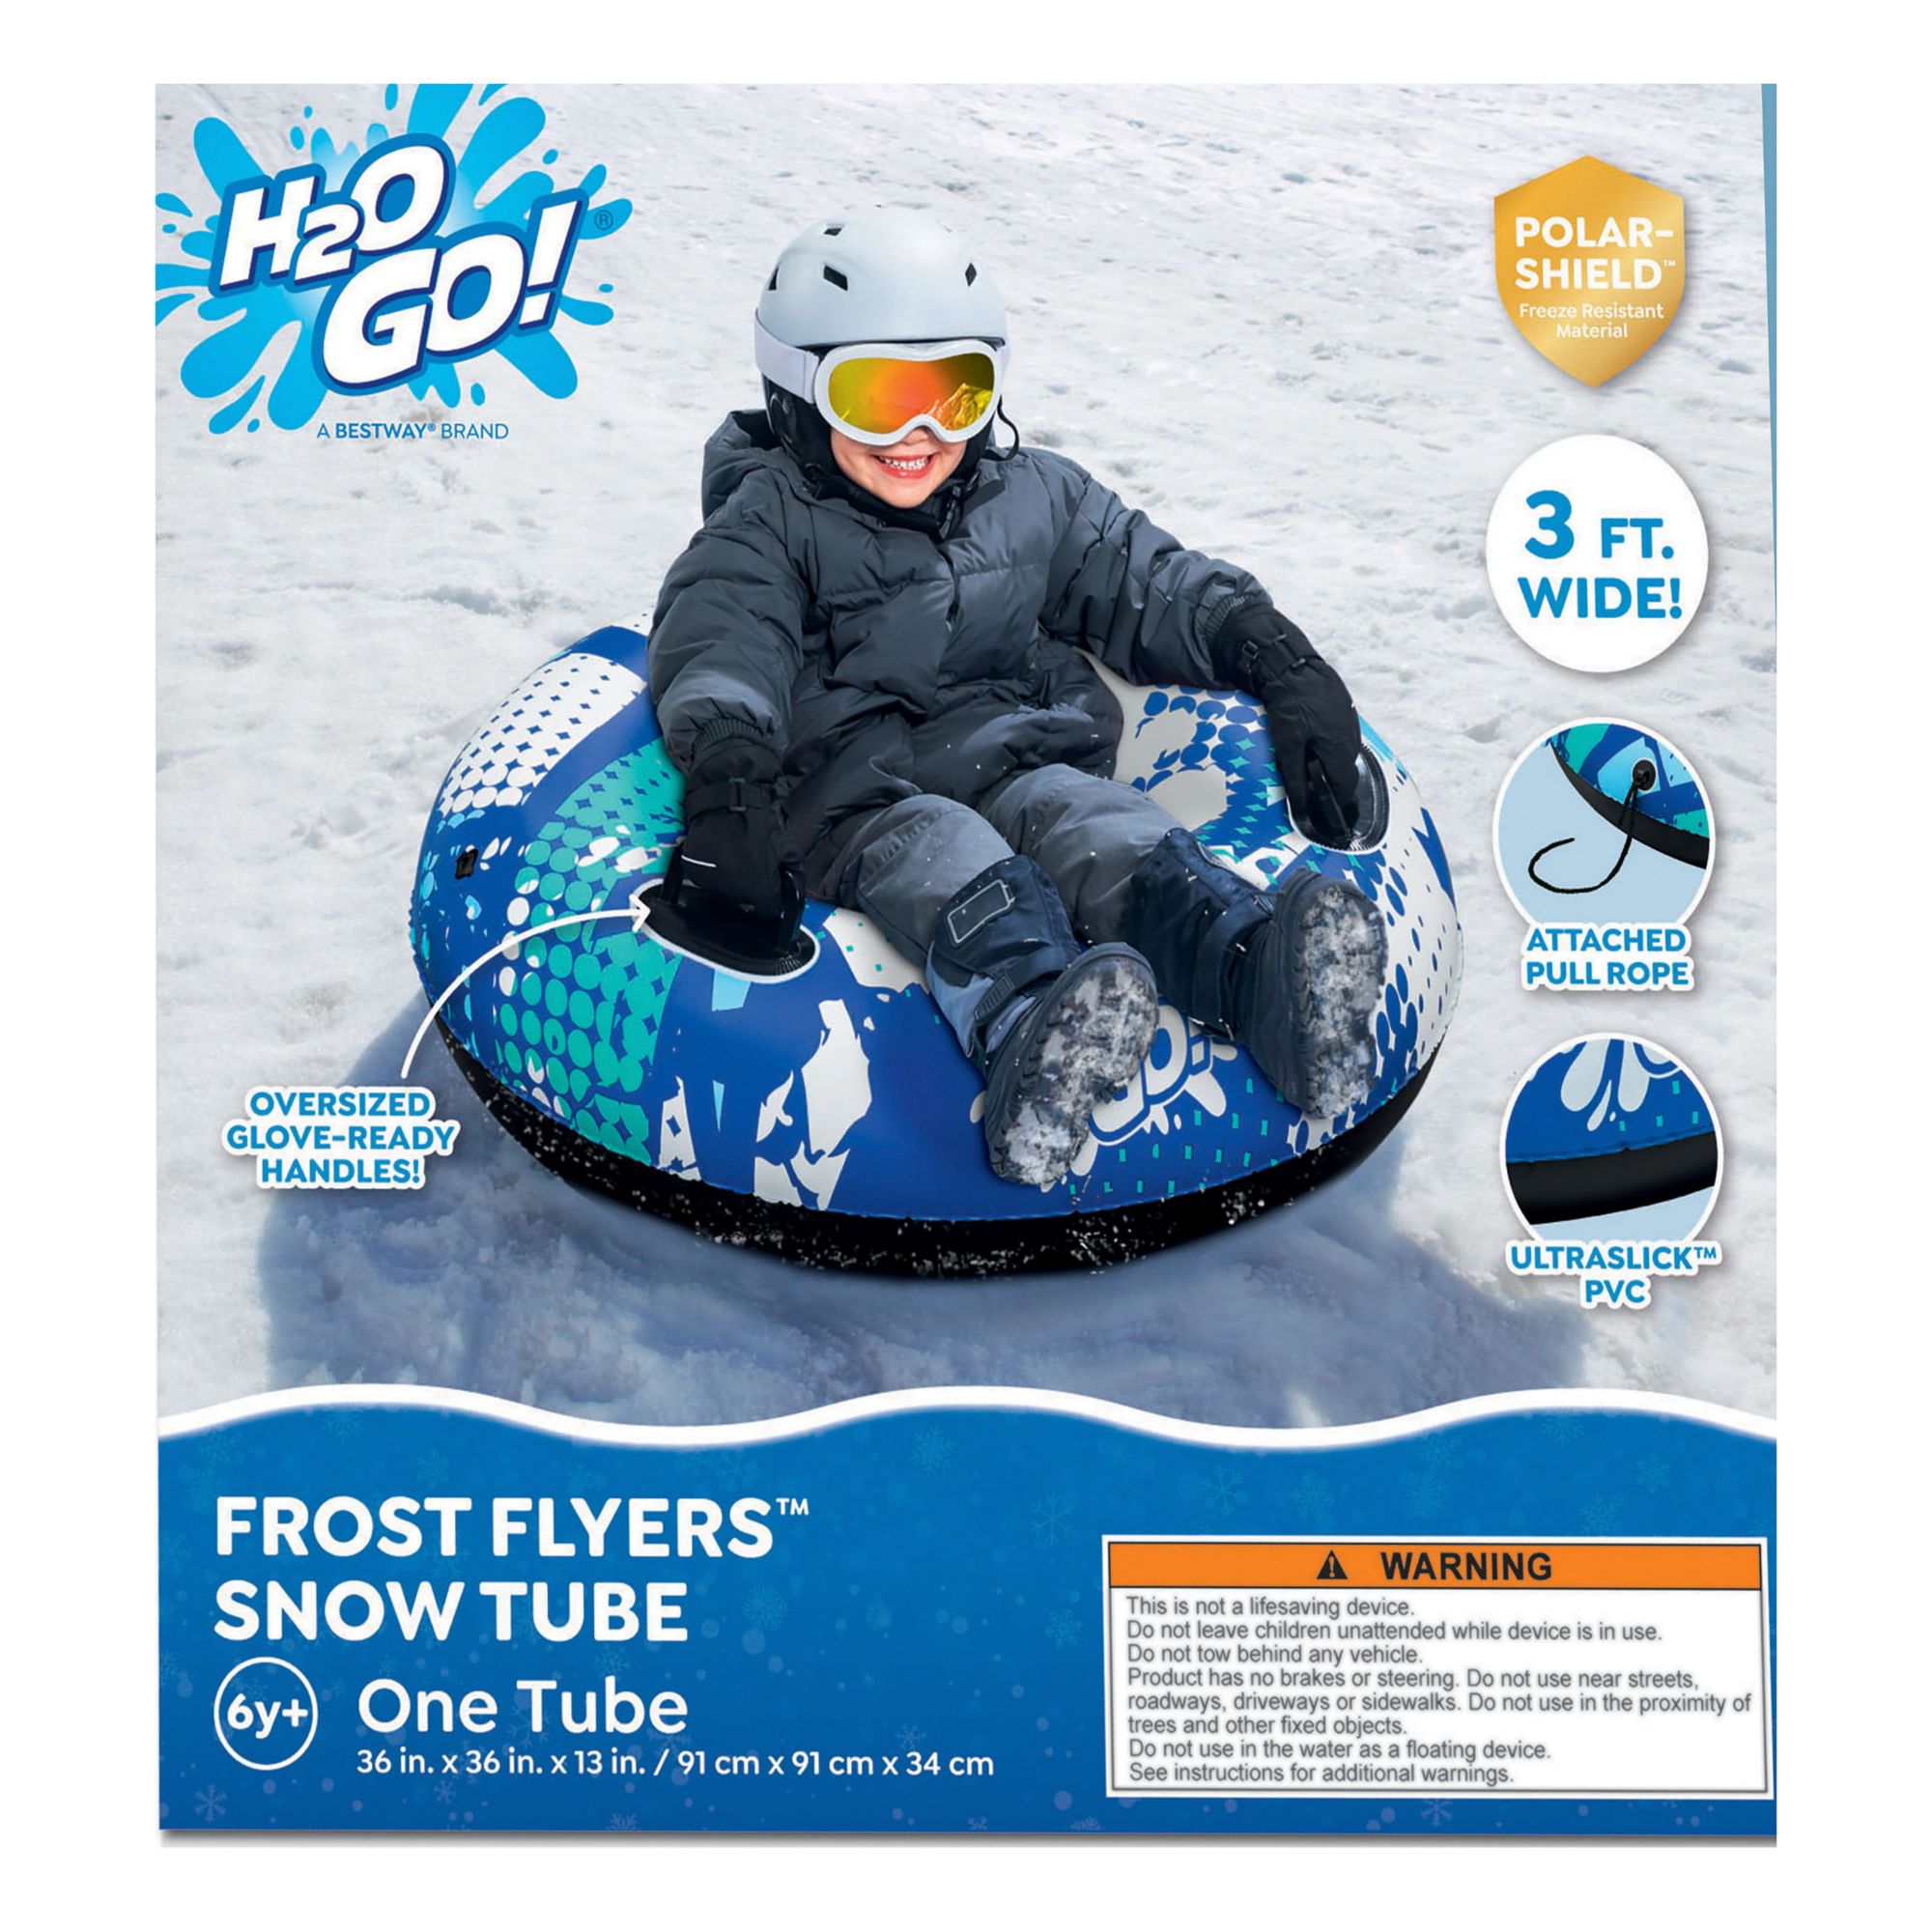 H2OGO Frost Flyers Snow Tube Assortment